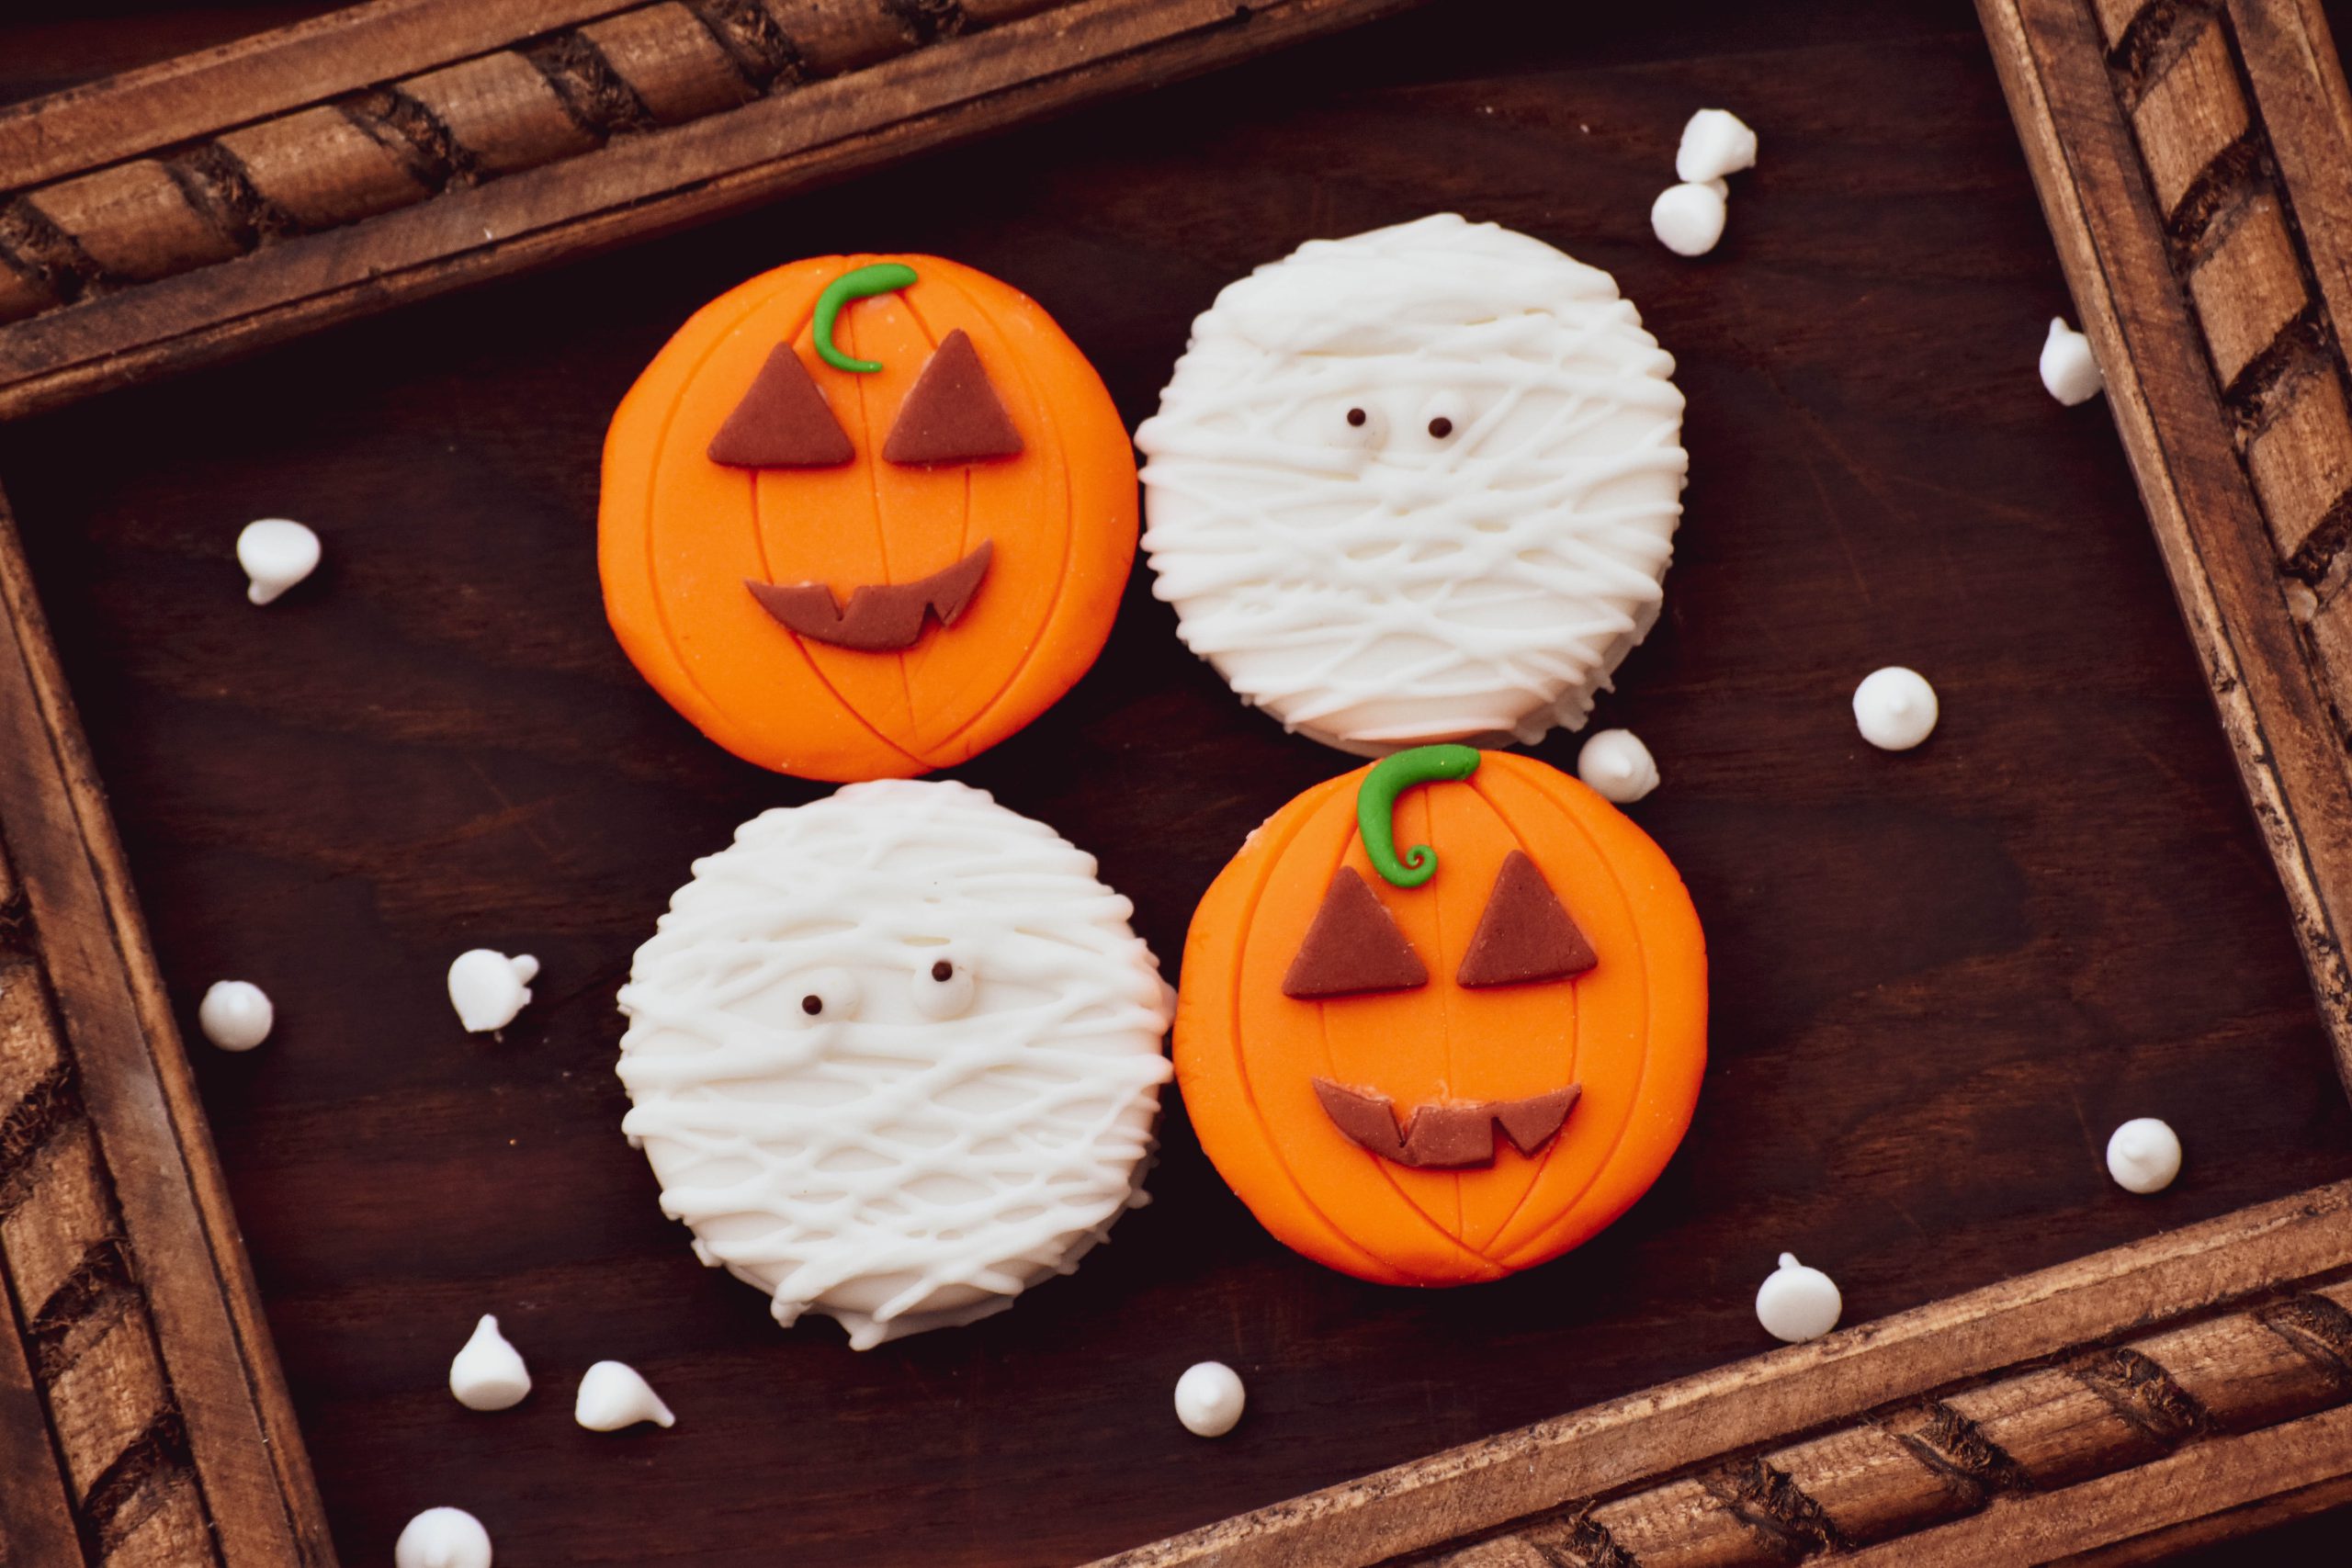 halloween cookies decorated as pumpkins and mummies